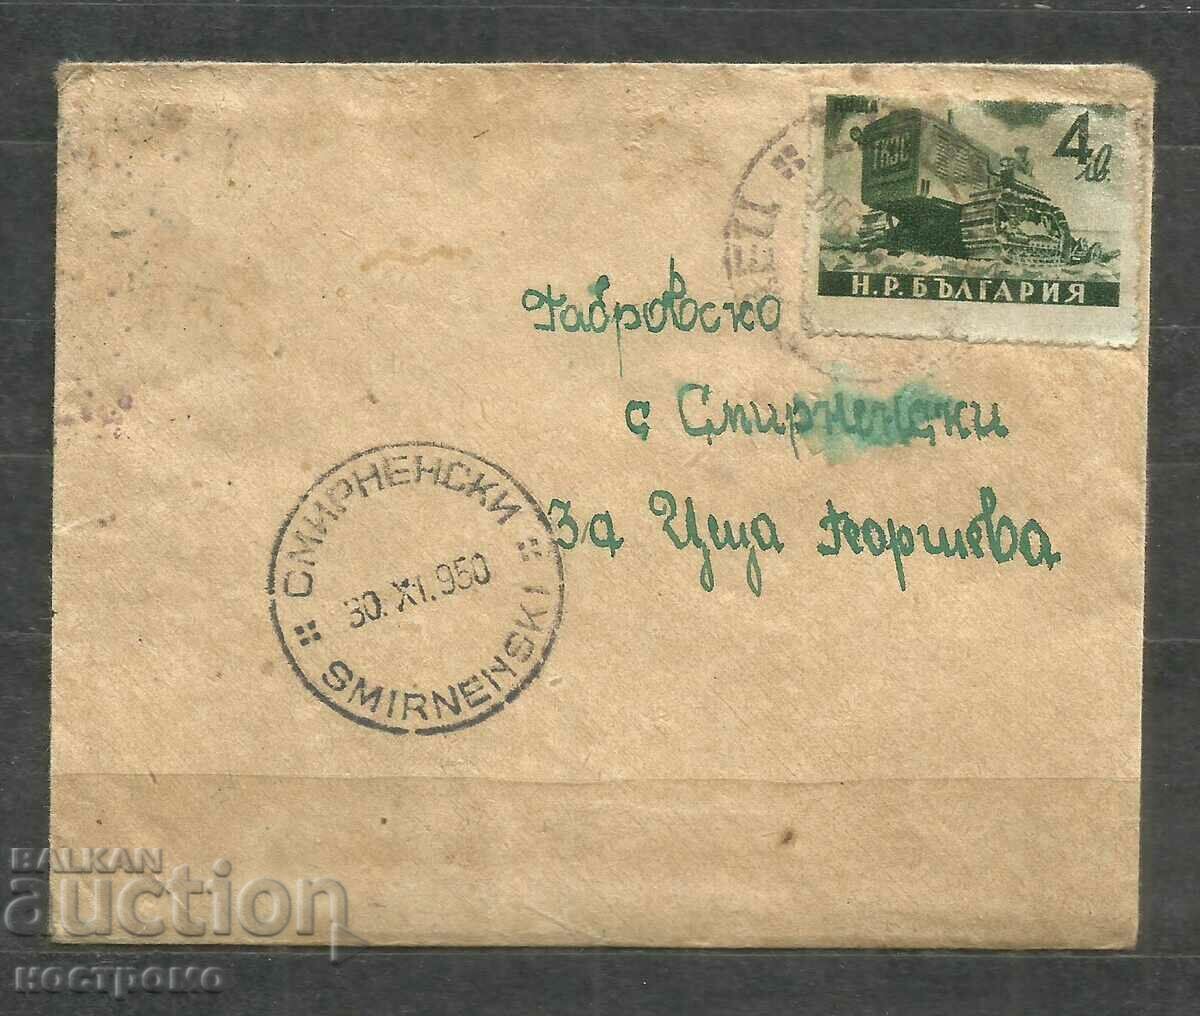 Tractor - Traveled Old Letter Envelope - A 740